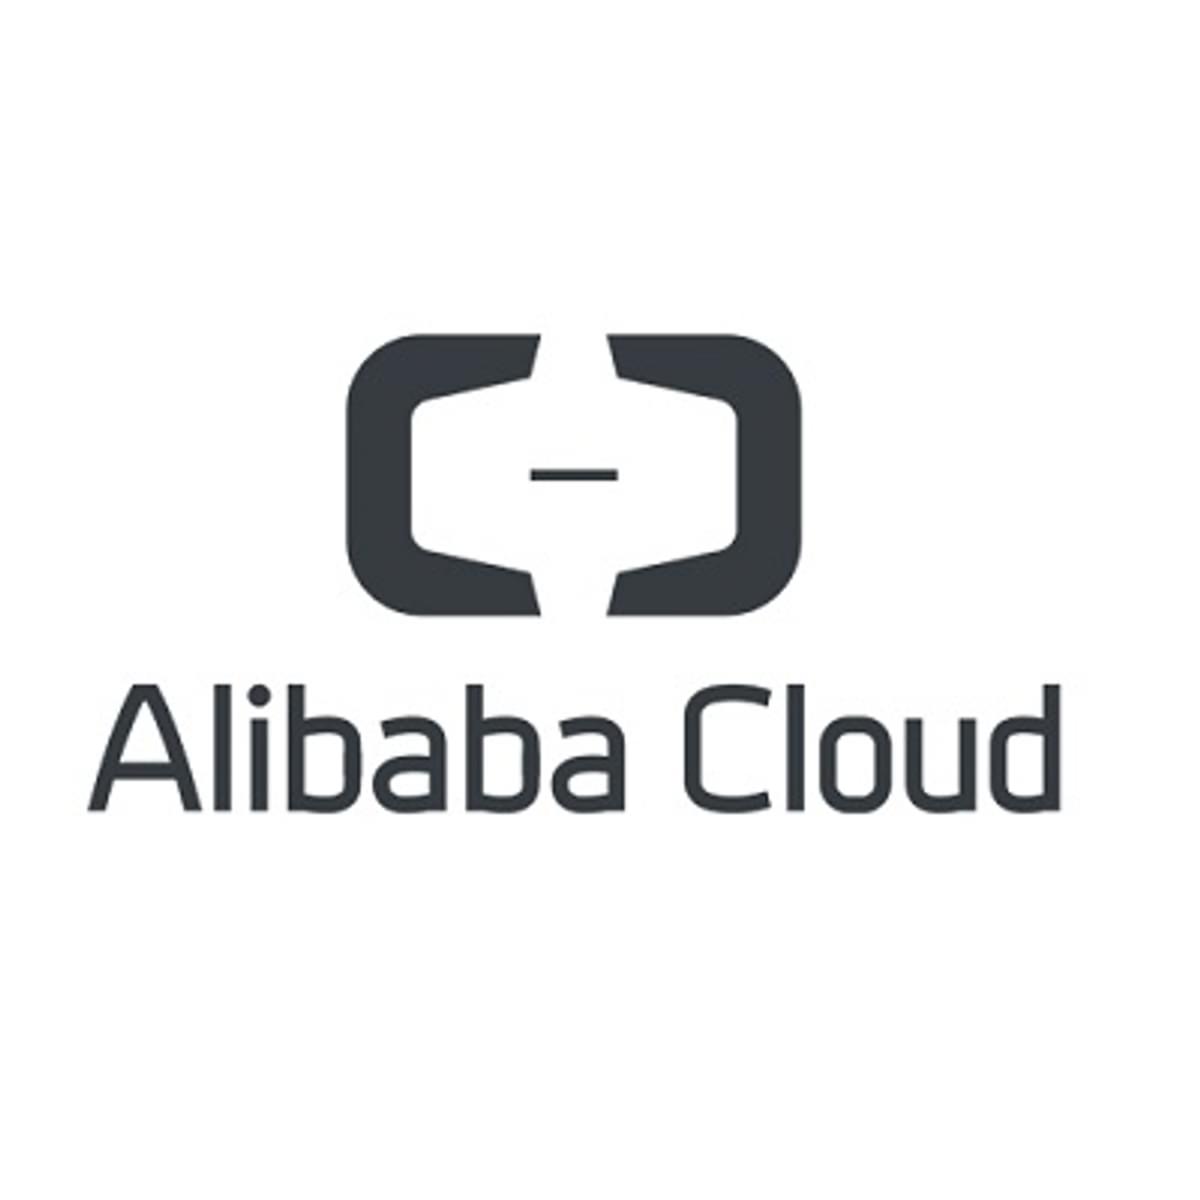 Alibaba ontwikkelt eigen AI-chips image